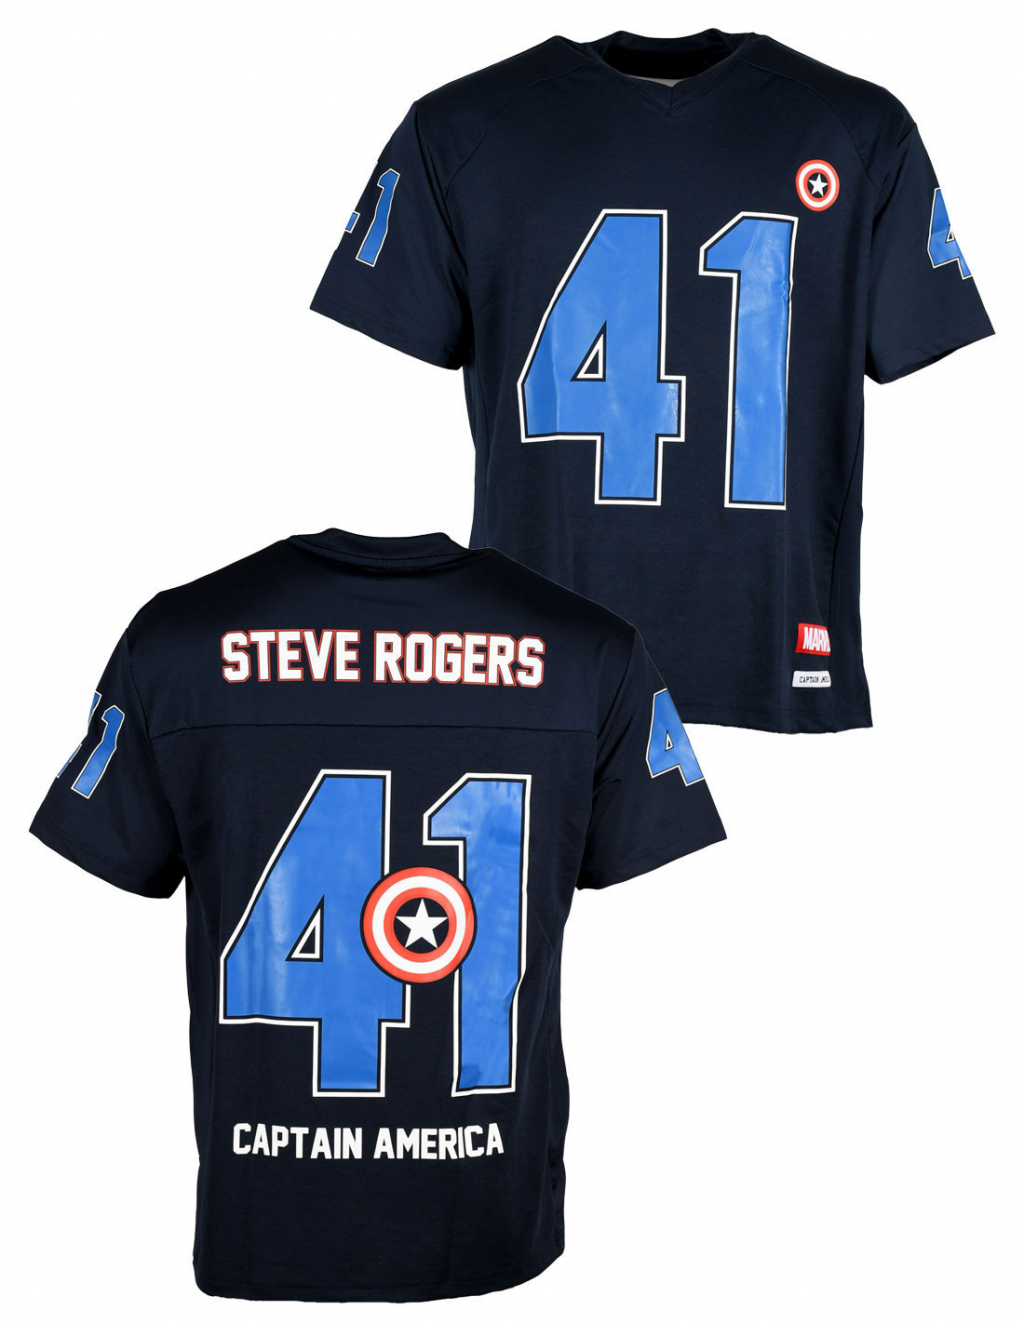 MARVEL - Captain America - T-Shirt Sports US Replica unisex (M)